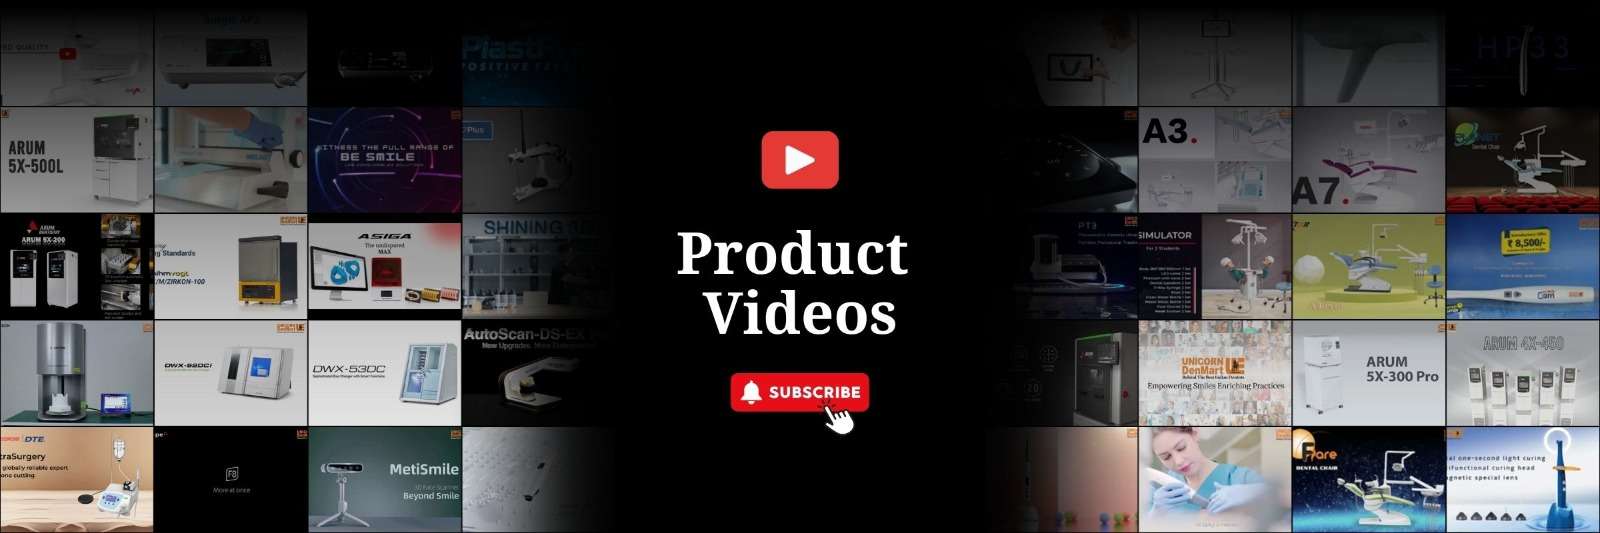 Unicorn Denmart Product Video